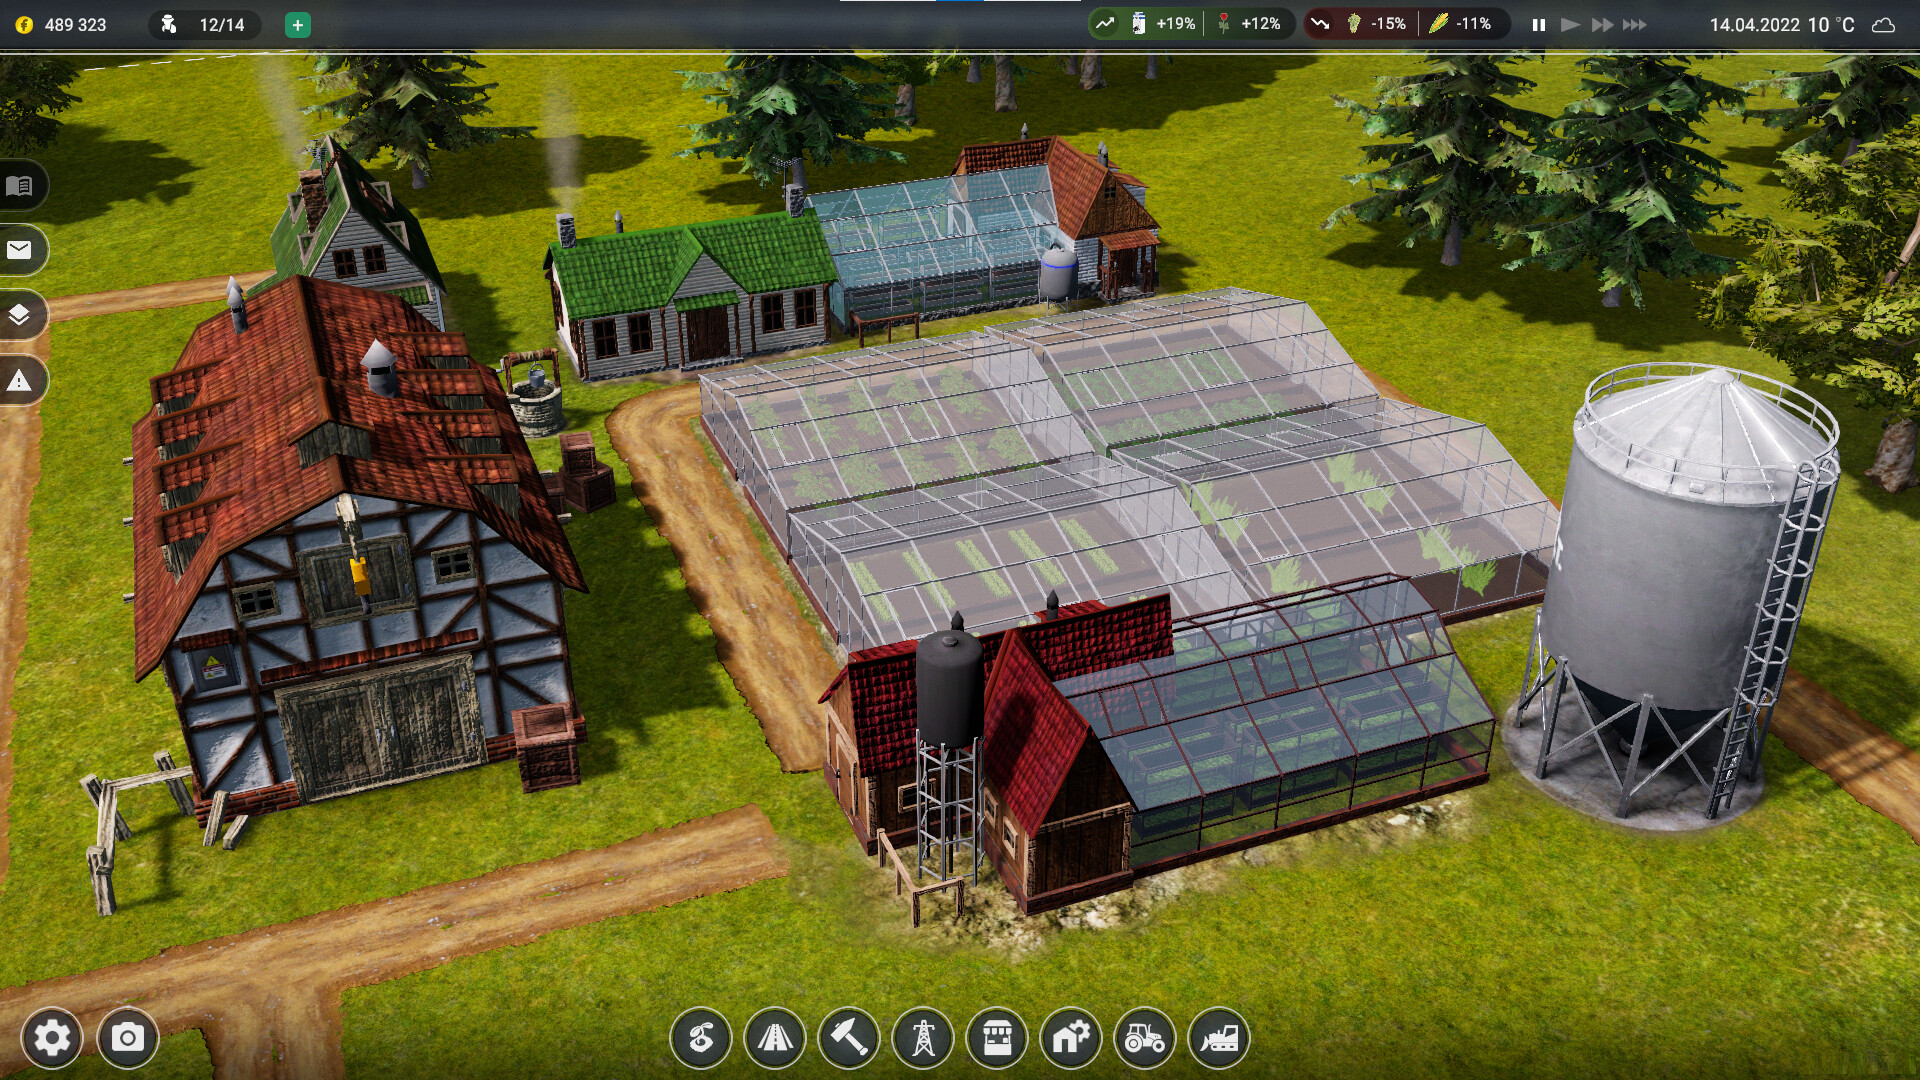 Farm Manager 2021 - Floriculture DLC Featured Screenshot #1